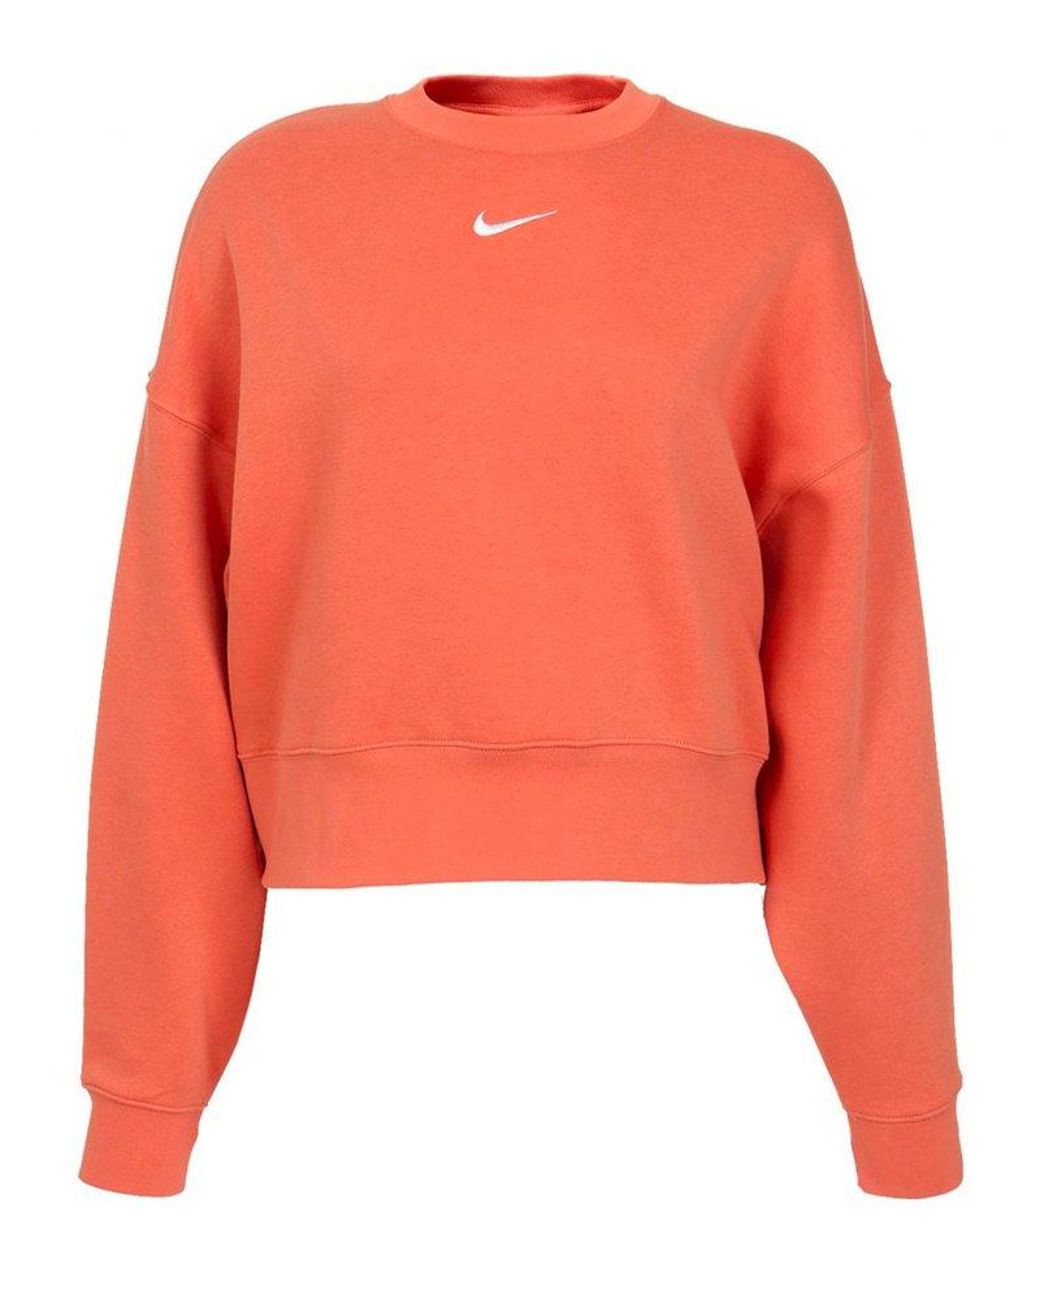 Nike Swoosh Logo Embroidered Crewneck Sweatshirt in Orange